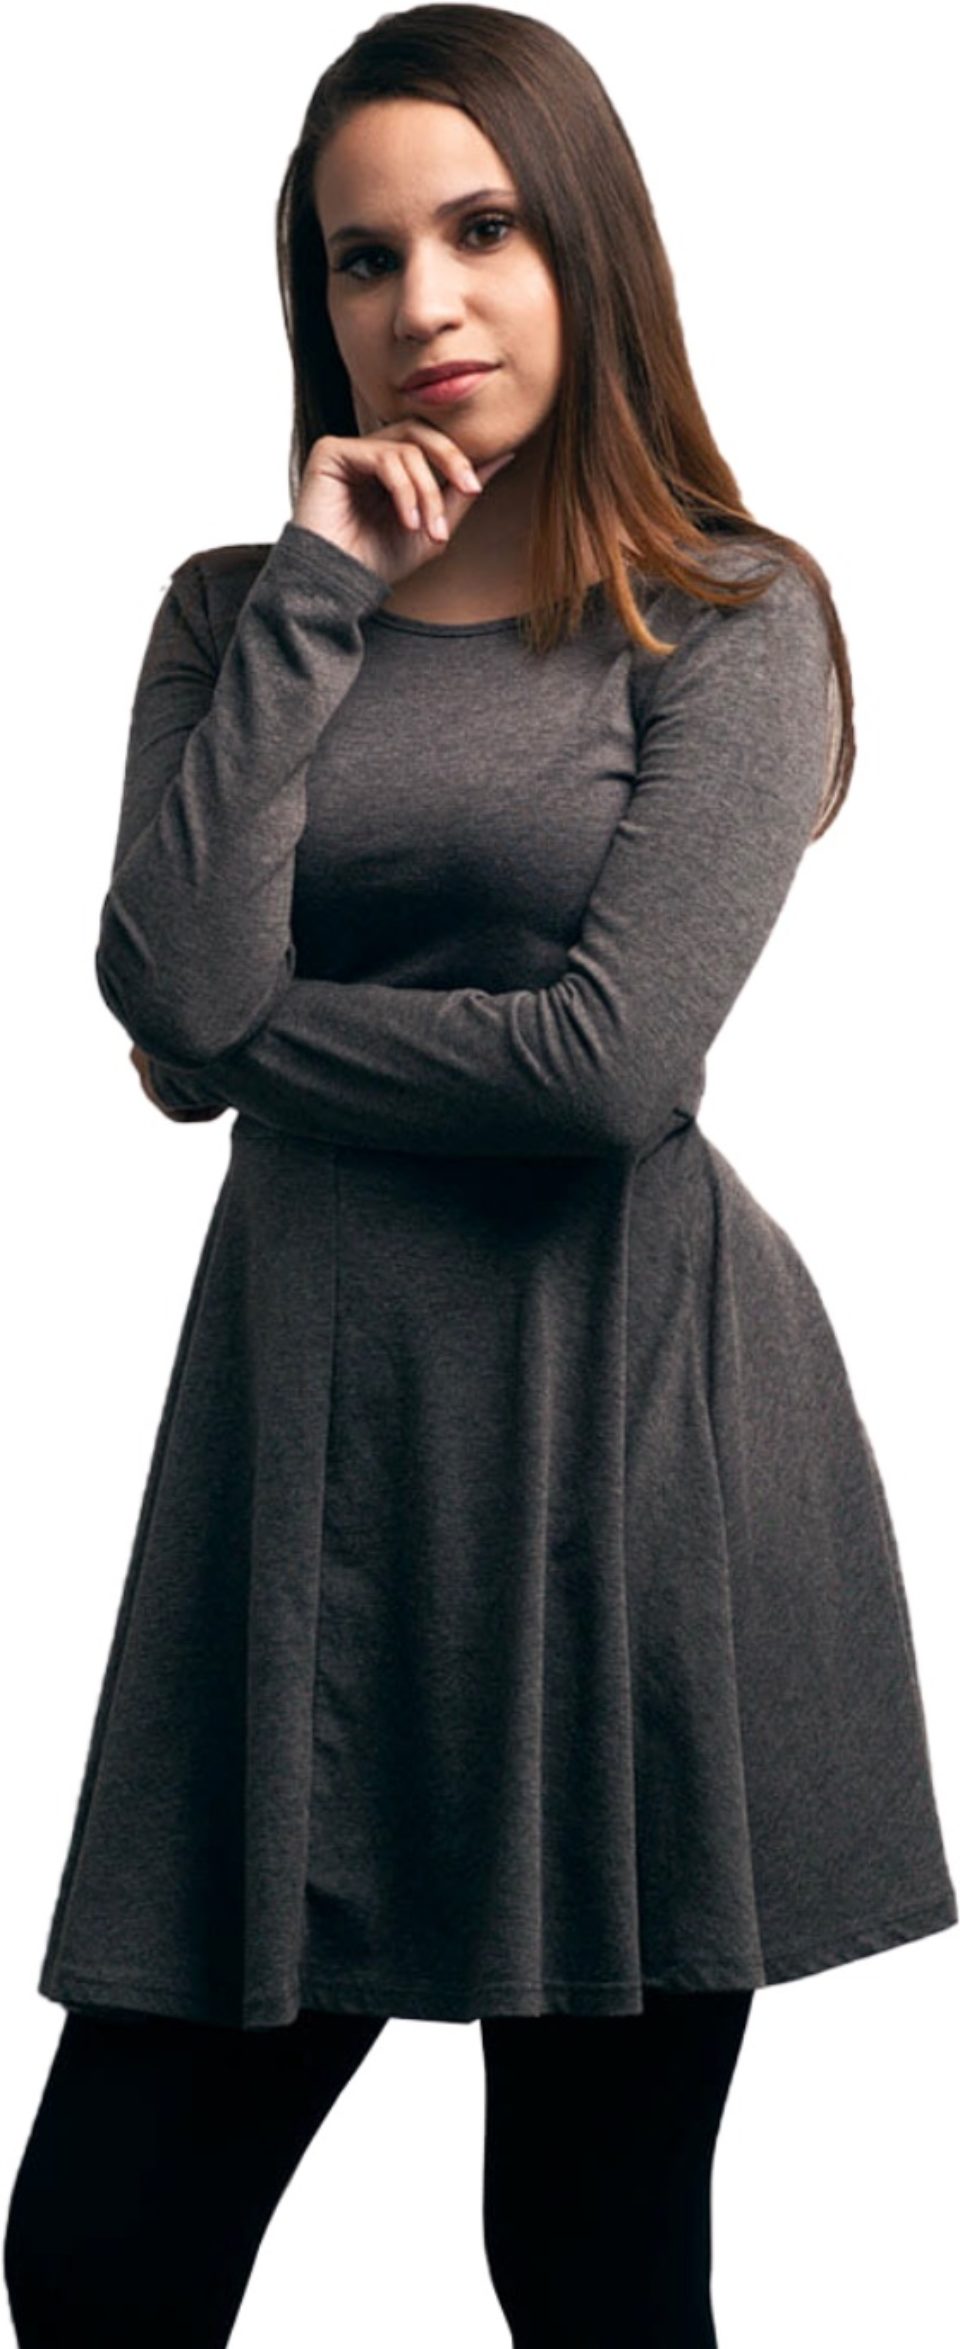 Dayra Schmidt Profile Image